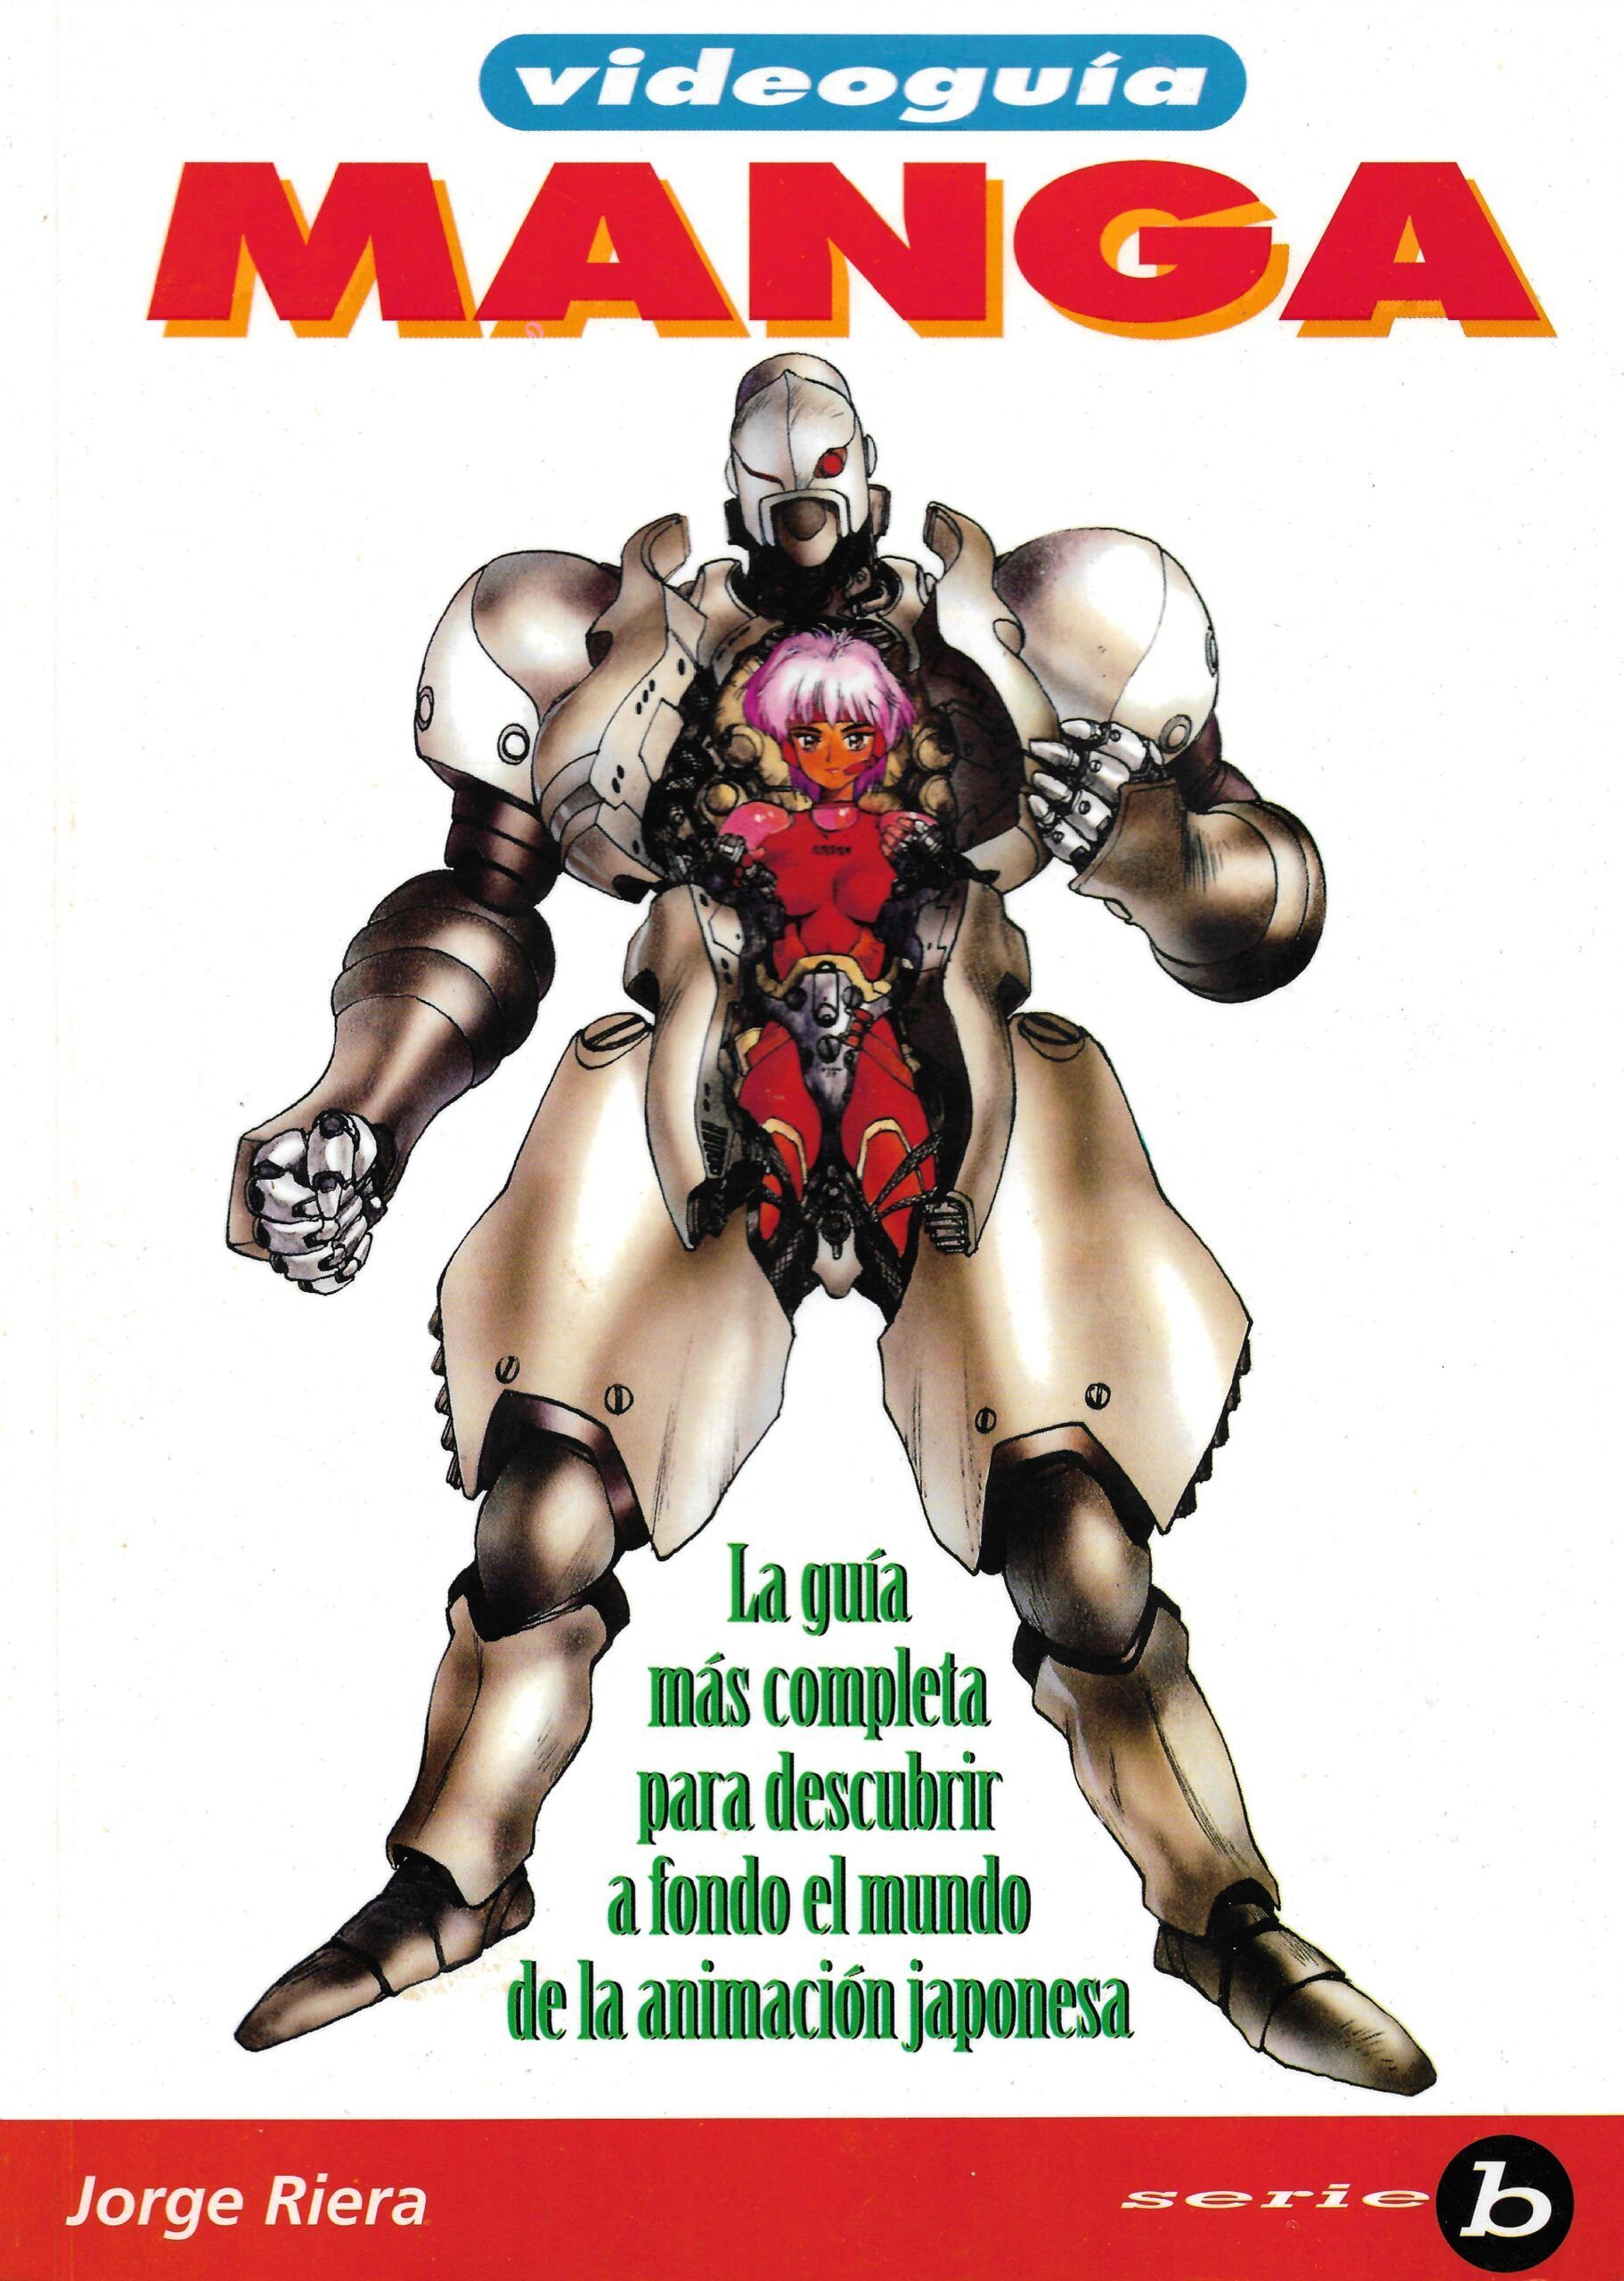 La Videoguía Manga (1996)